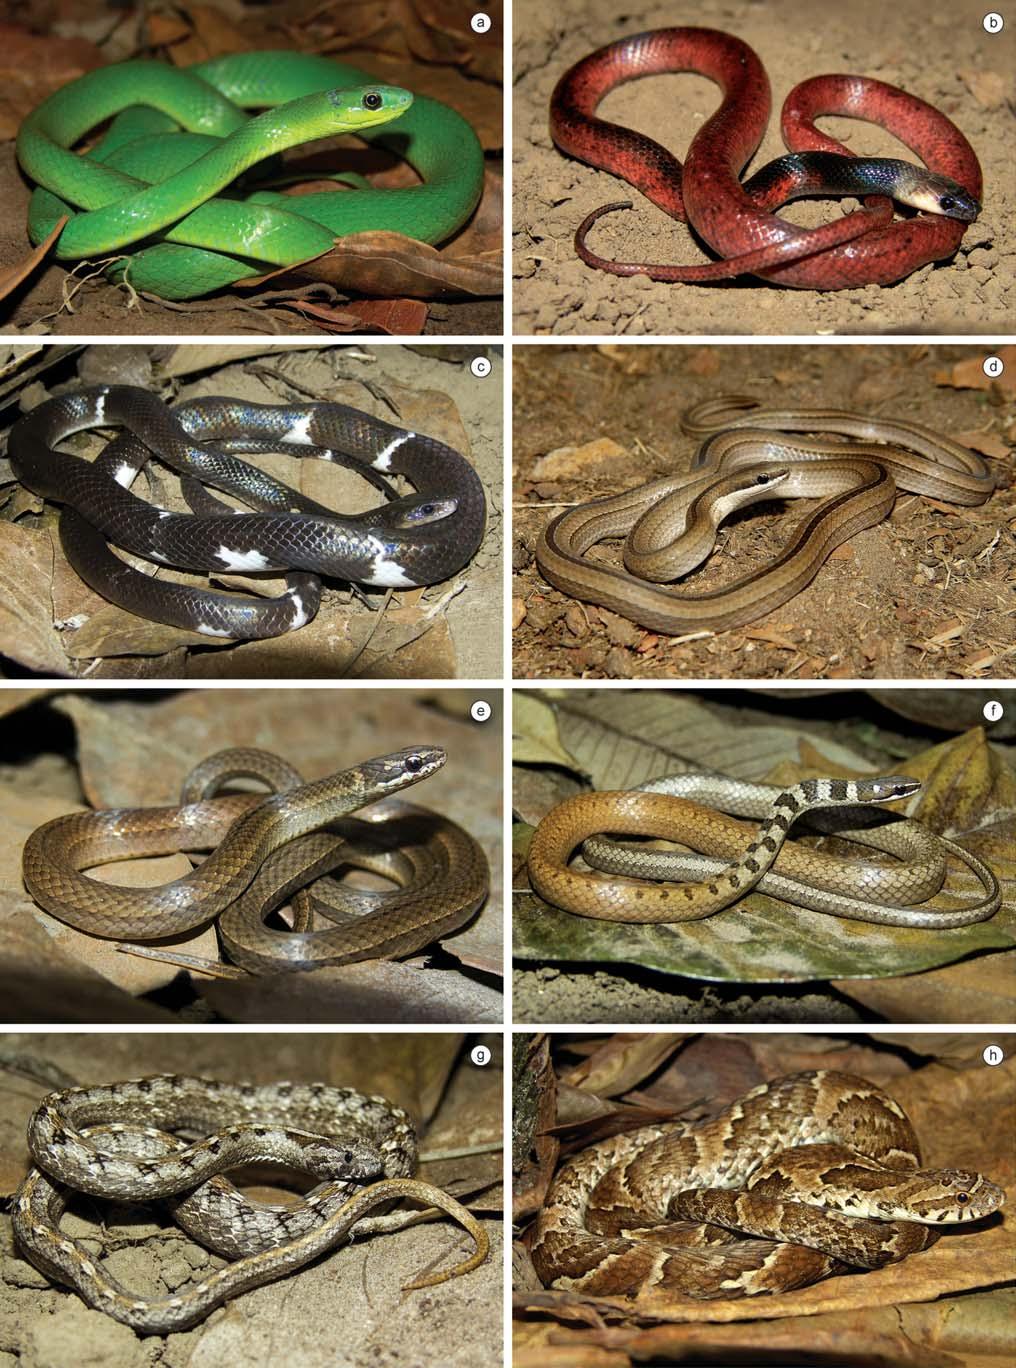 252 Biota Neotrop., vol. 10, no. 3 Loebmann, D. & Haddad, C.F.B. Figure 18. Reptile species found in the region of CPI.